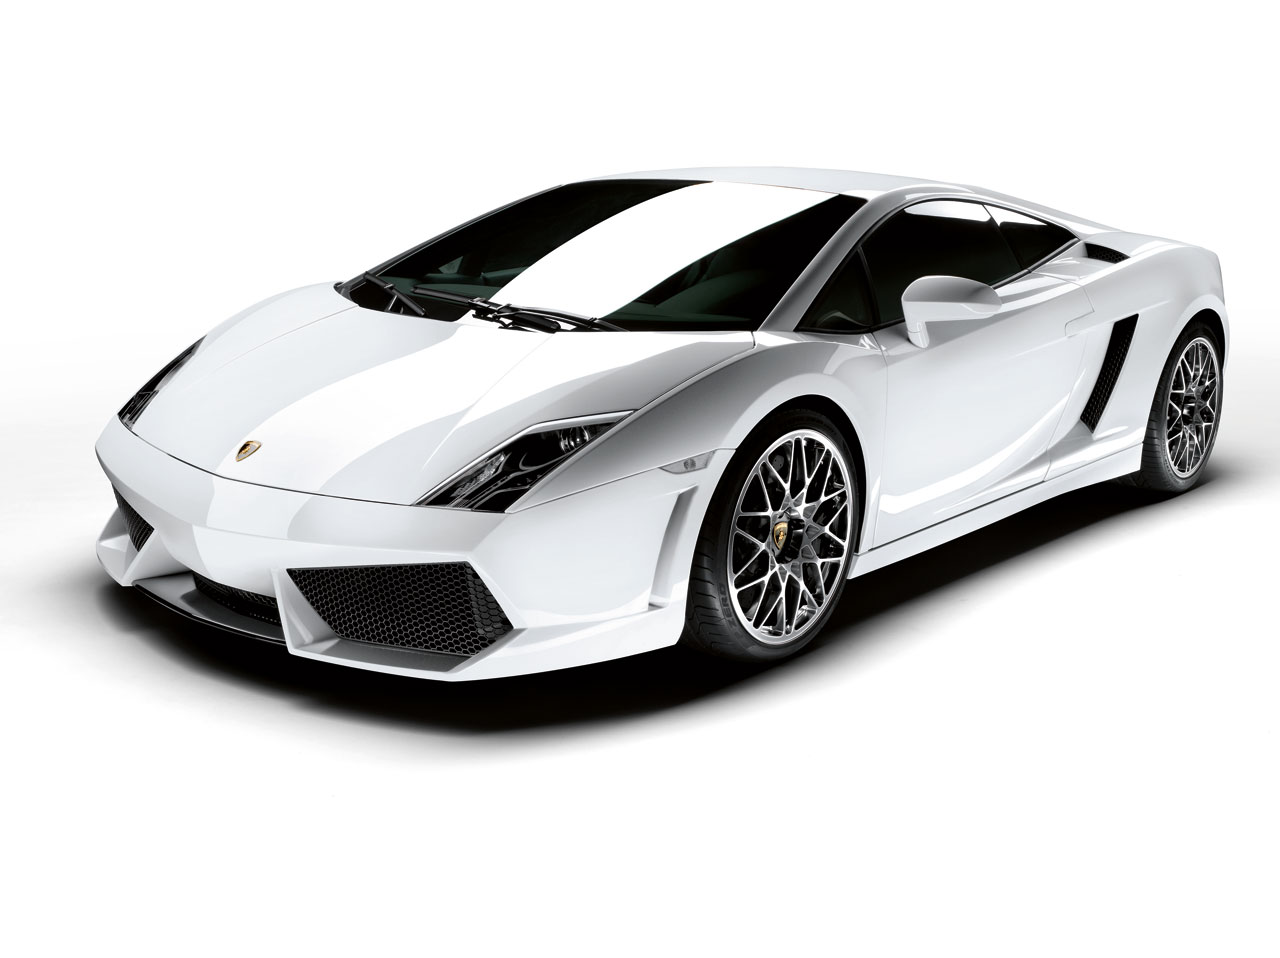 2011 Lamborghini Gallardo photo gallery